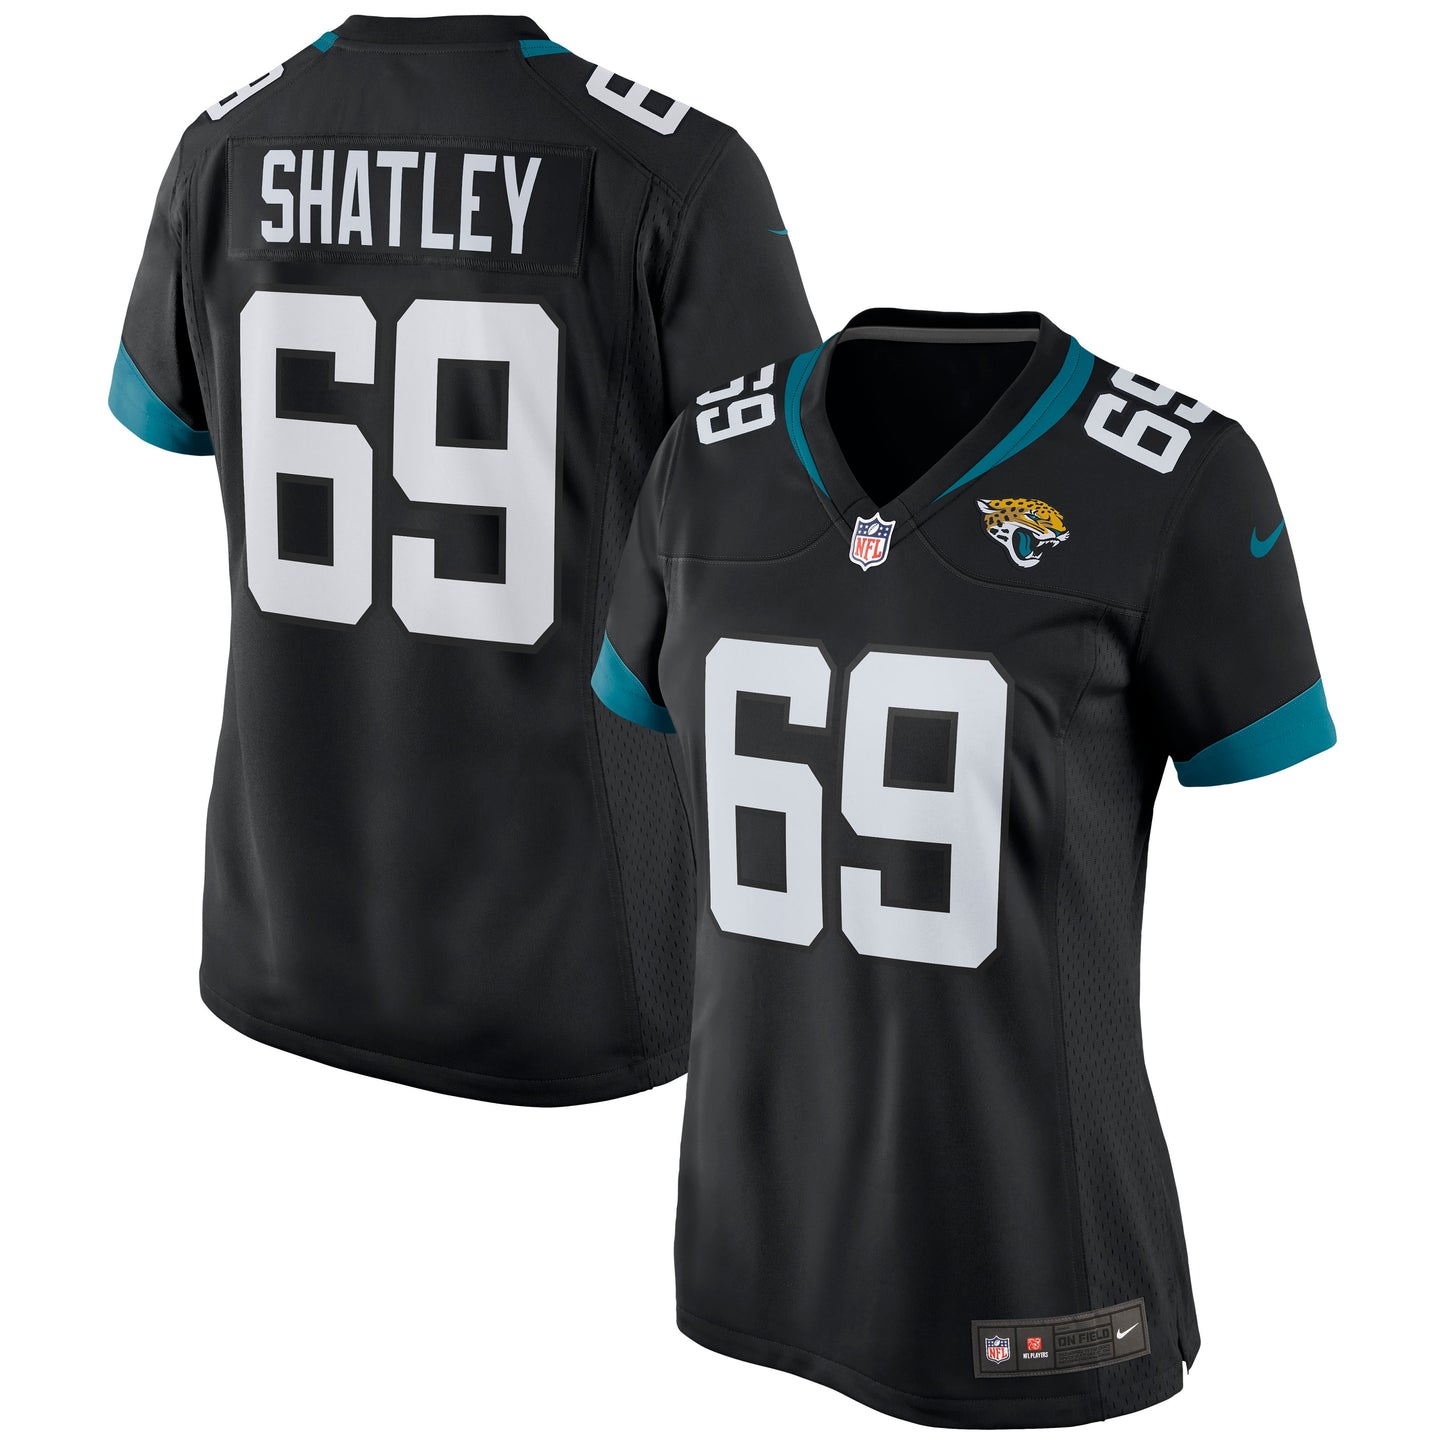 Tyler Shatley Jacksonville Jaguars Nike Women's Game Jersey - Black